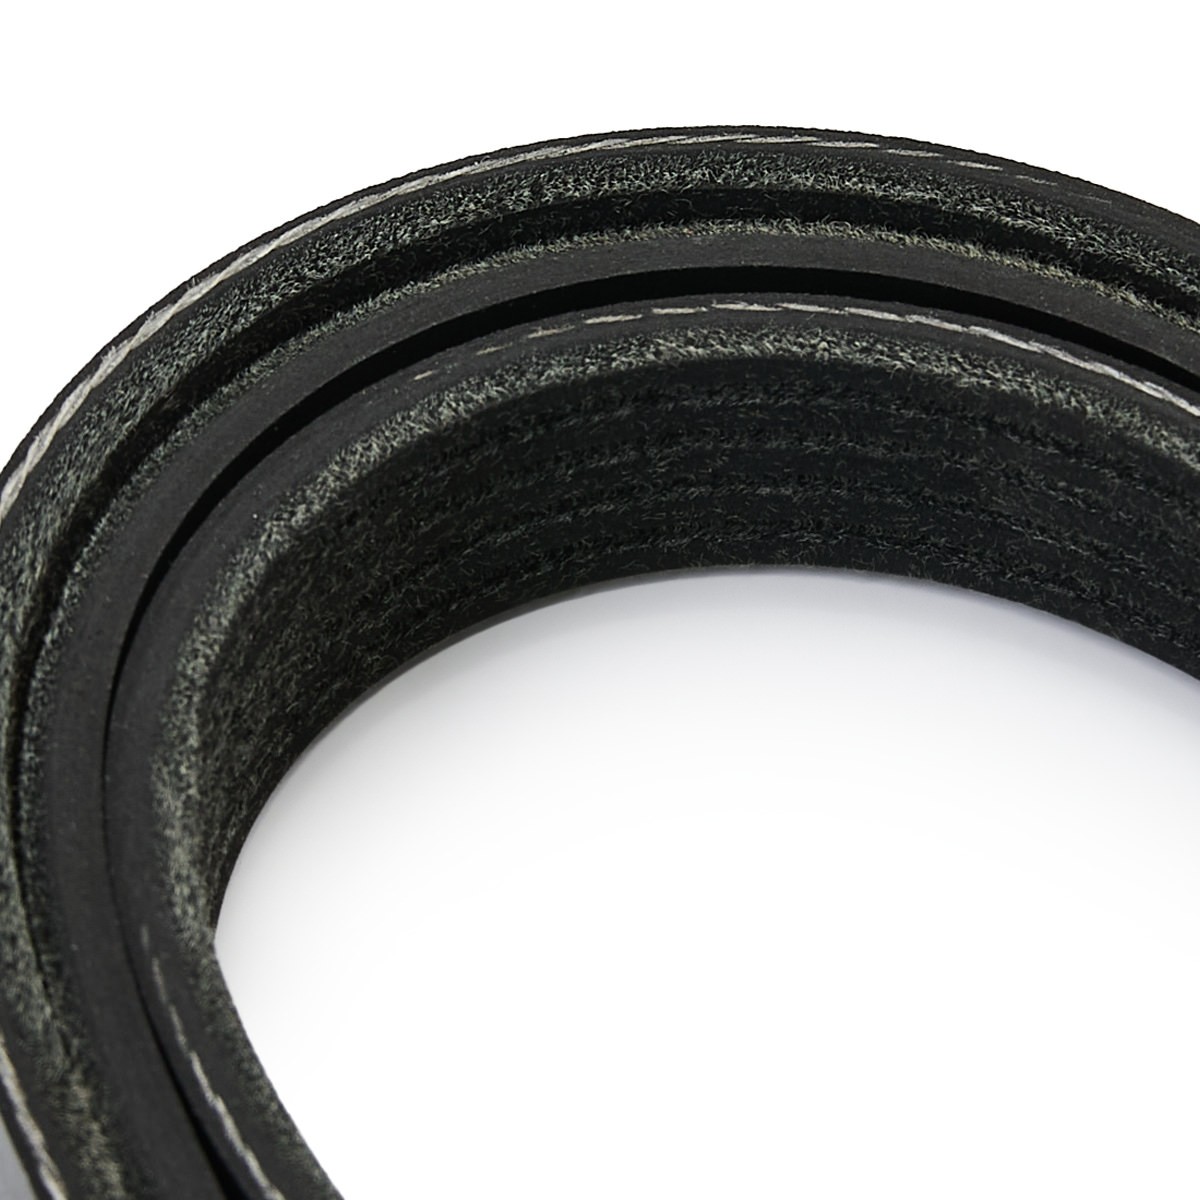 RIDEX 305P0582 Aux belt 1790mm, 5, Polyester, EPDM (ethylene propylene diene Monomer (M-class) rubber)